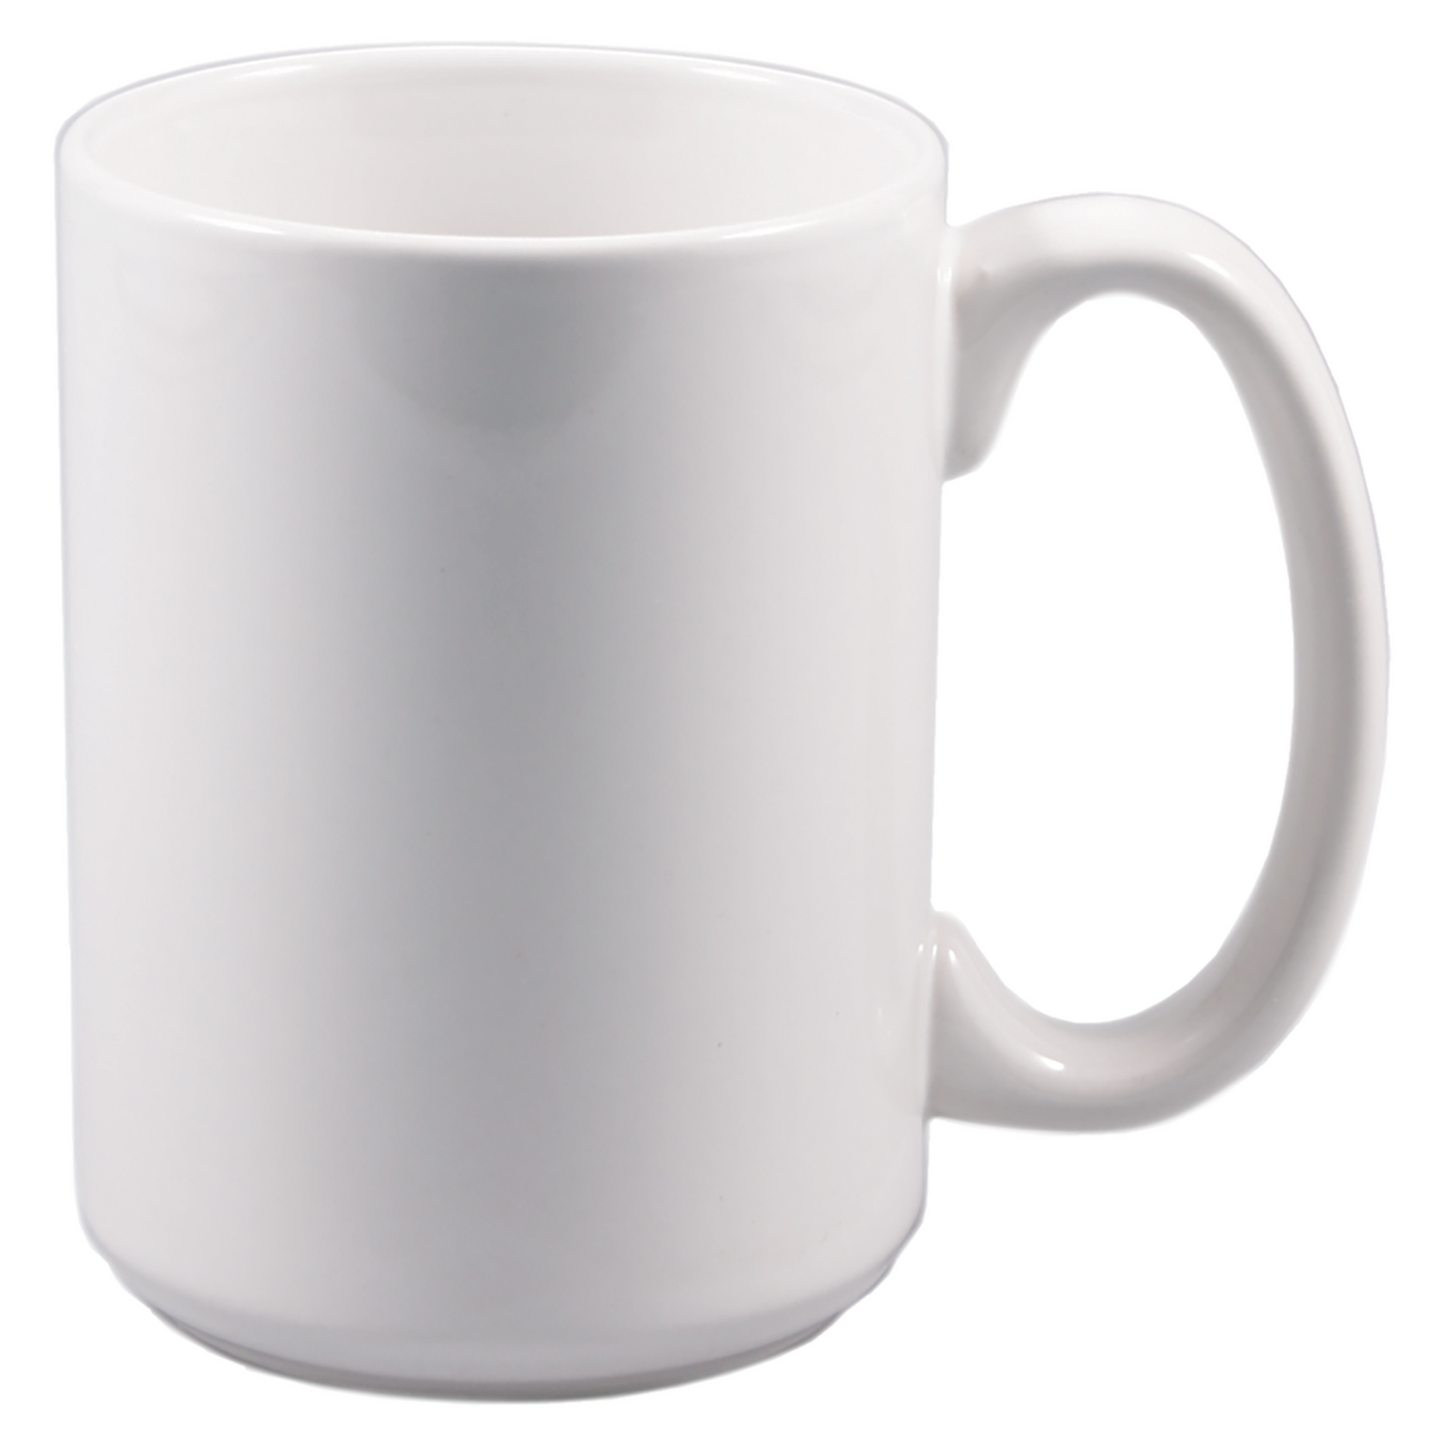 15 oz. White Sublimatable Ceramic Mug